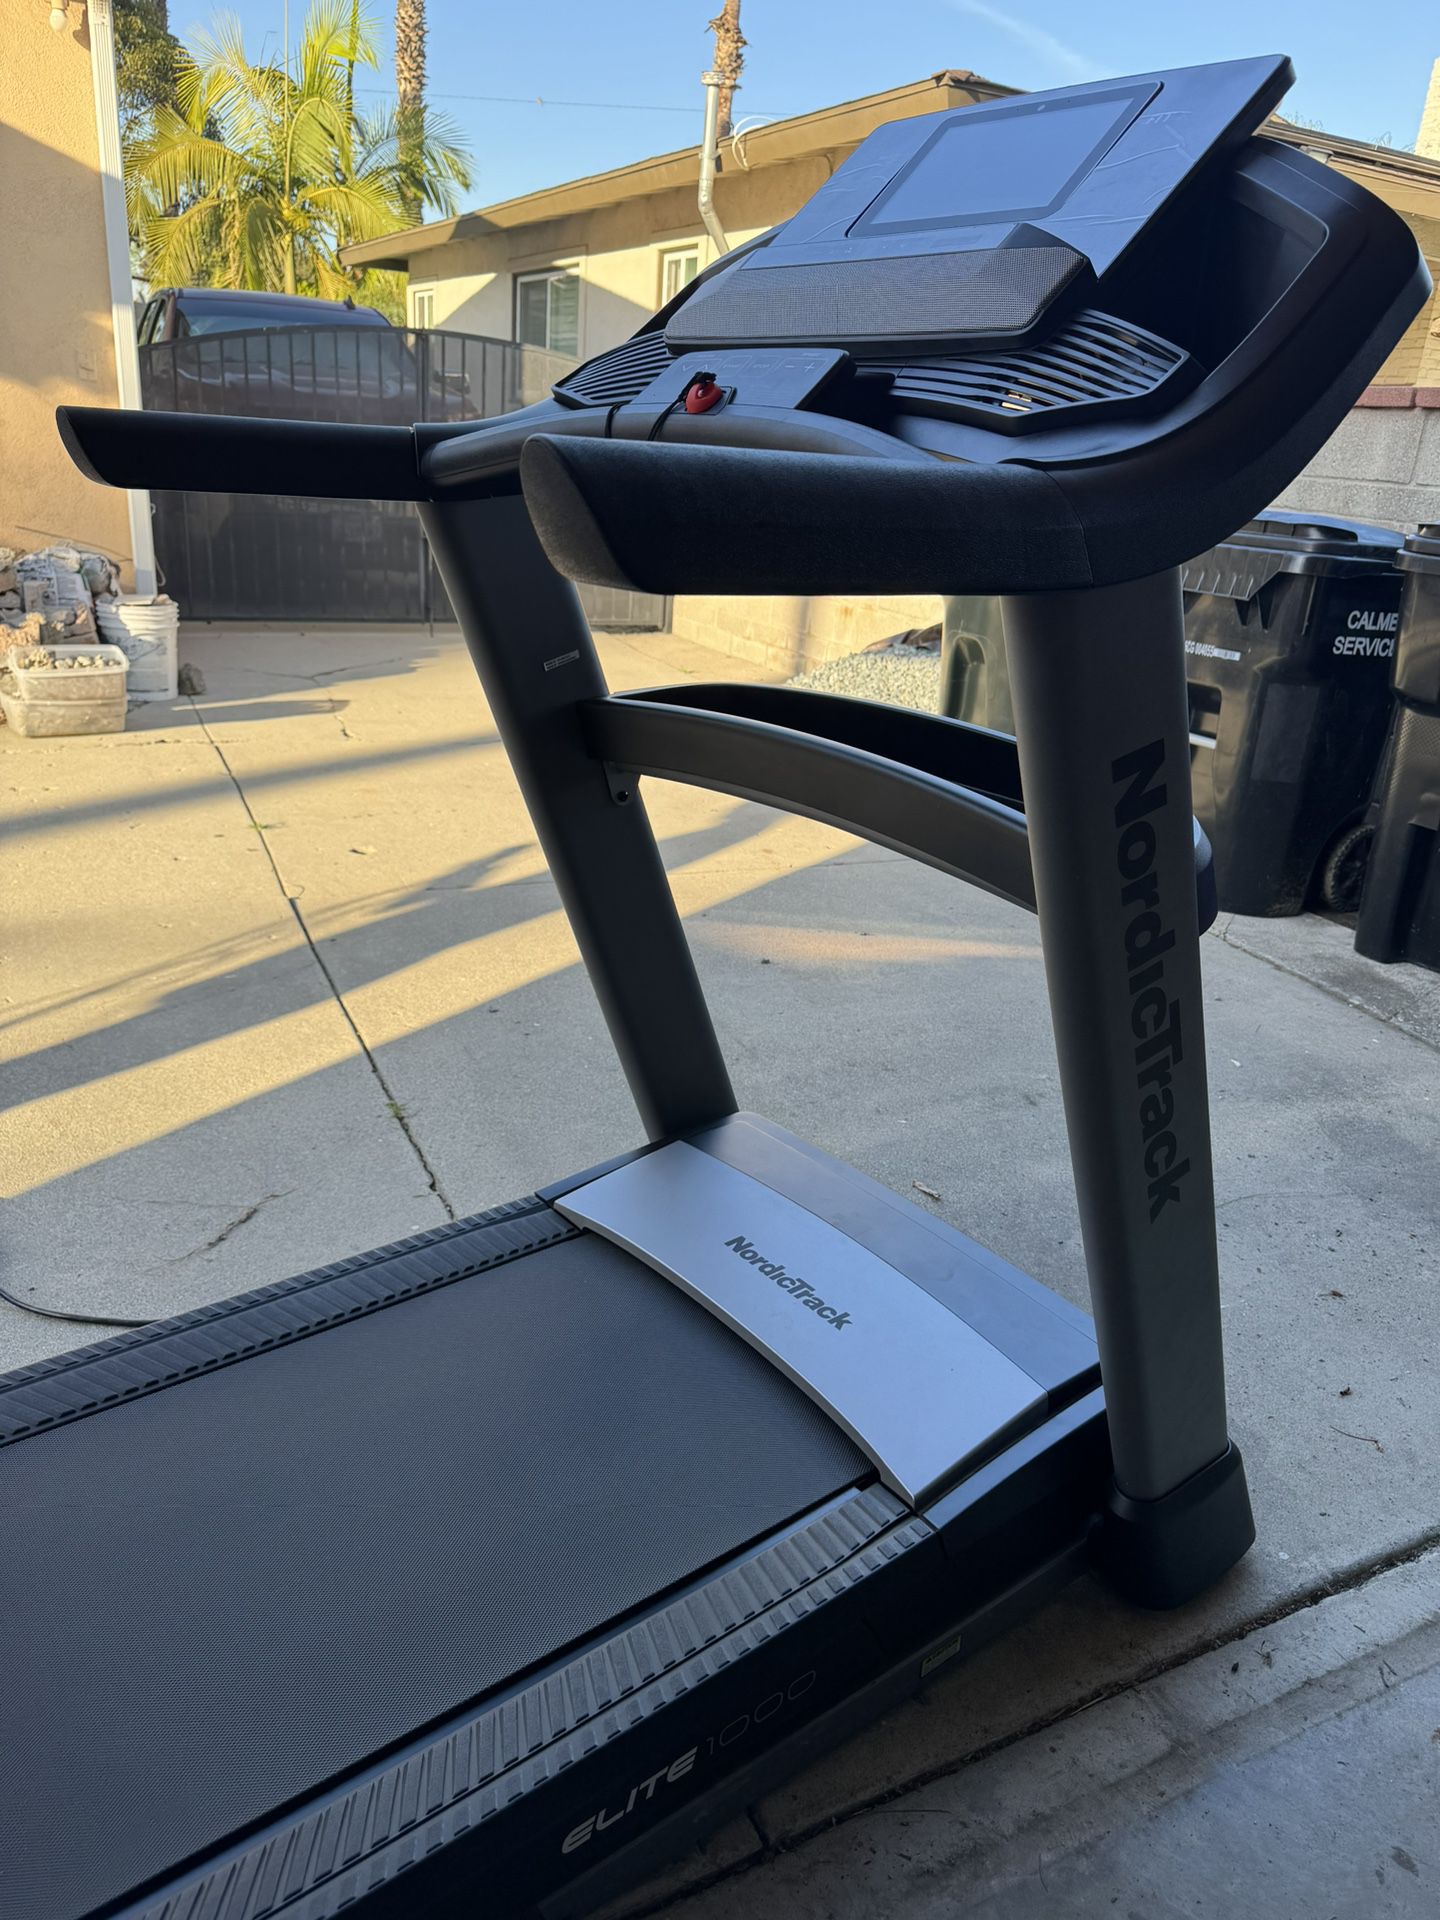 NordicTrack Elite 1000 Treadmill 